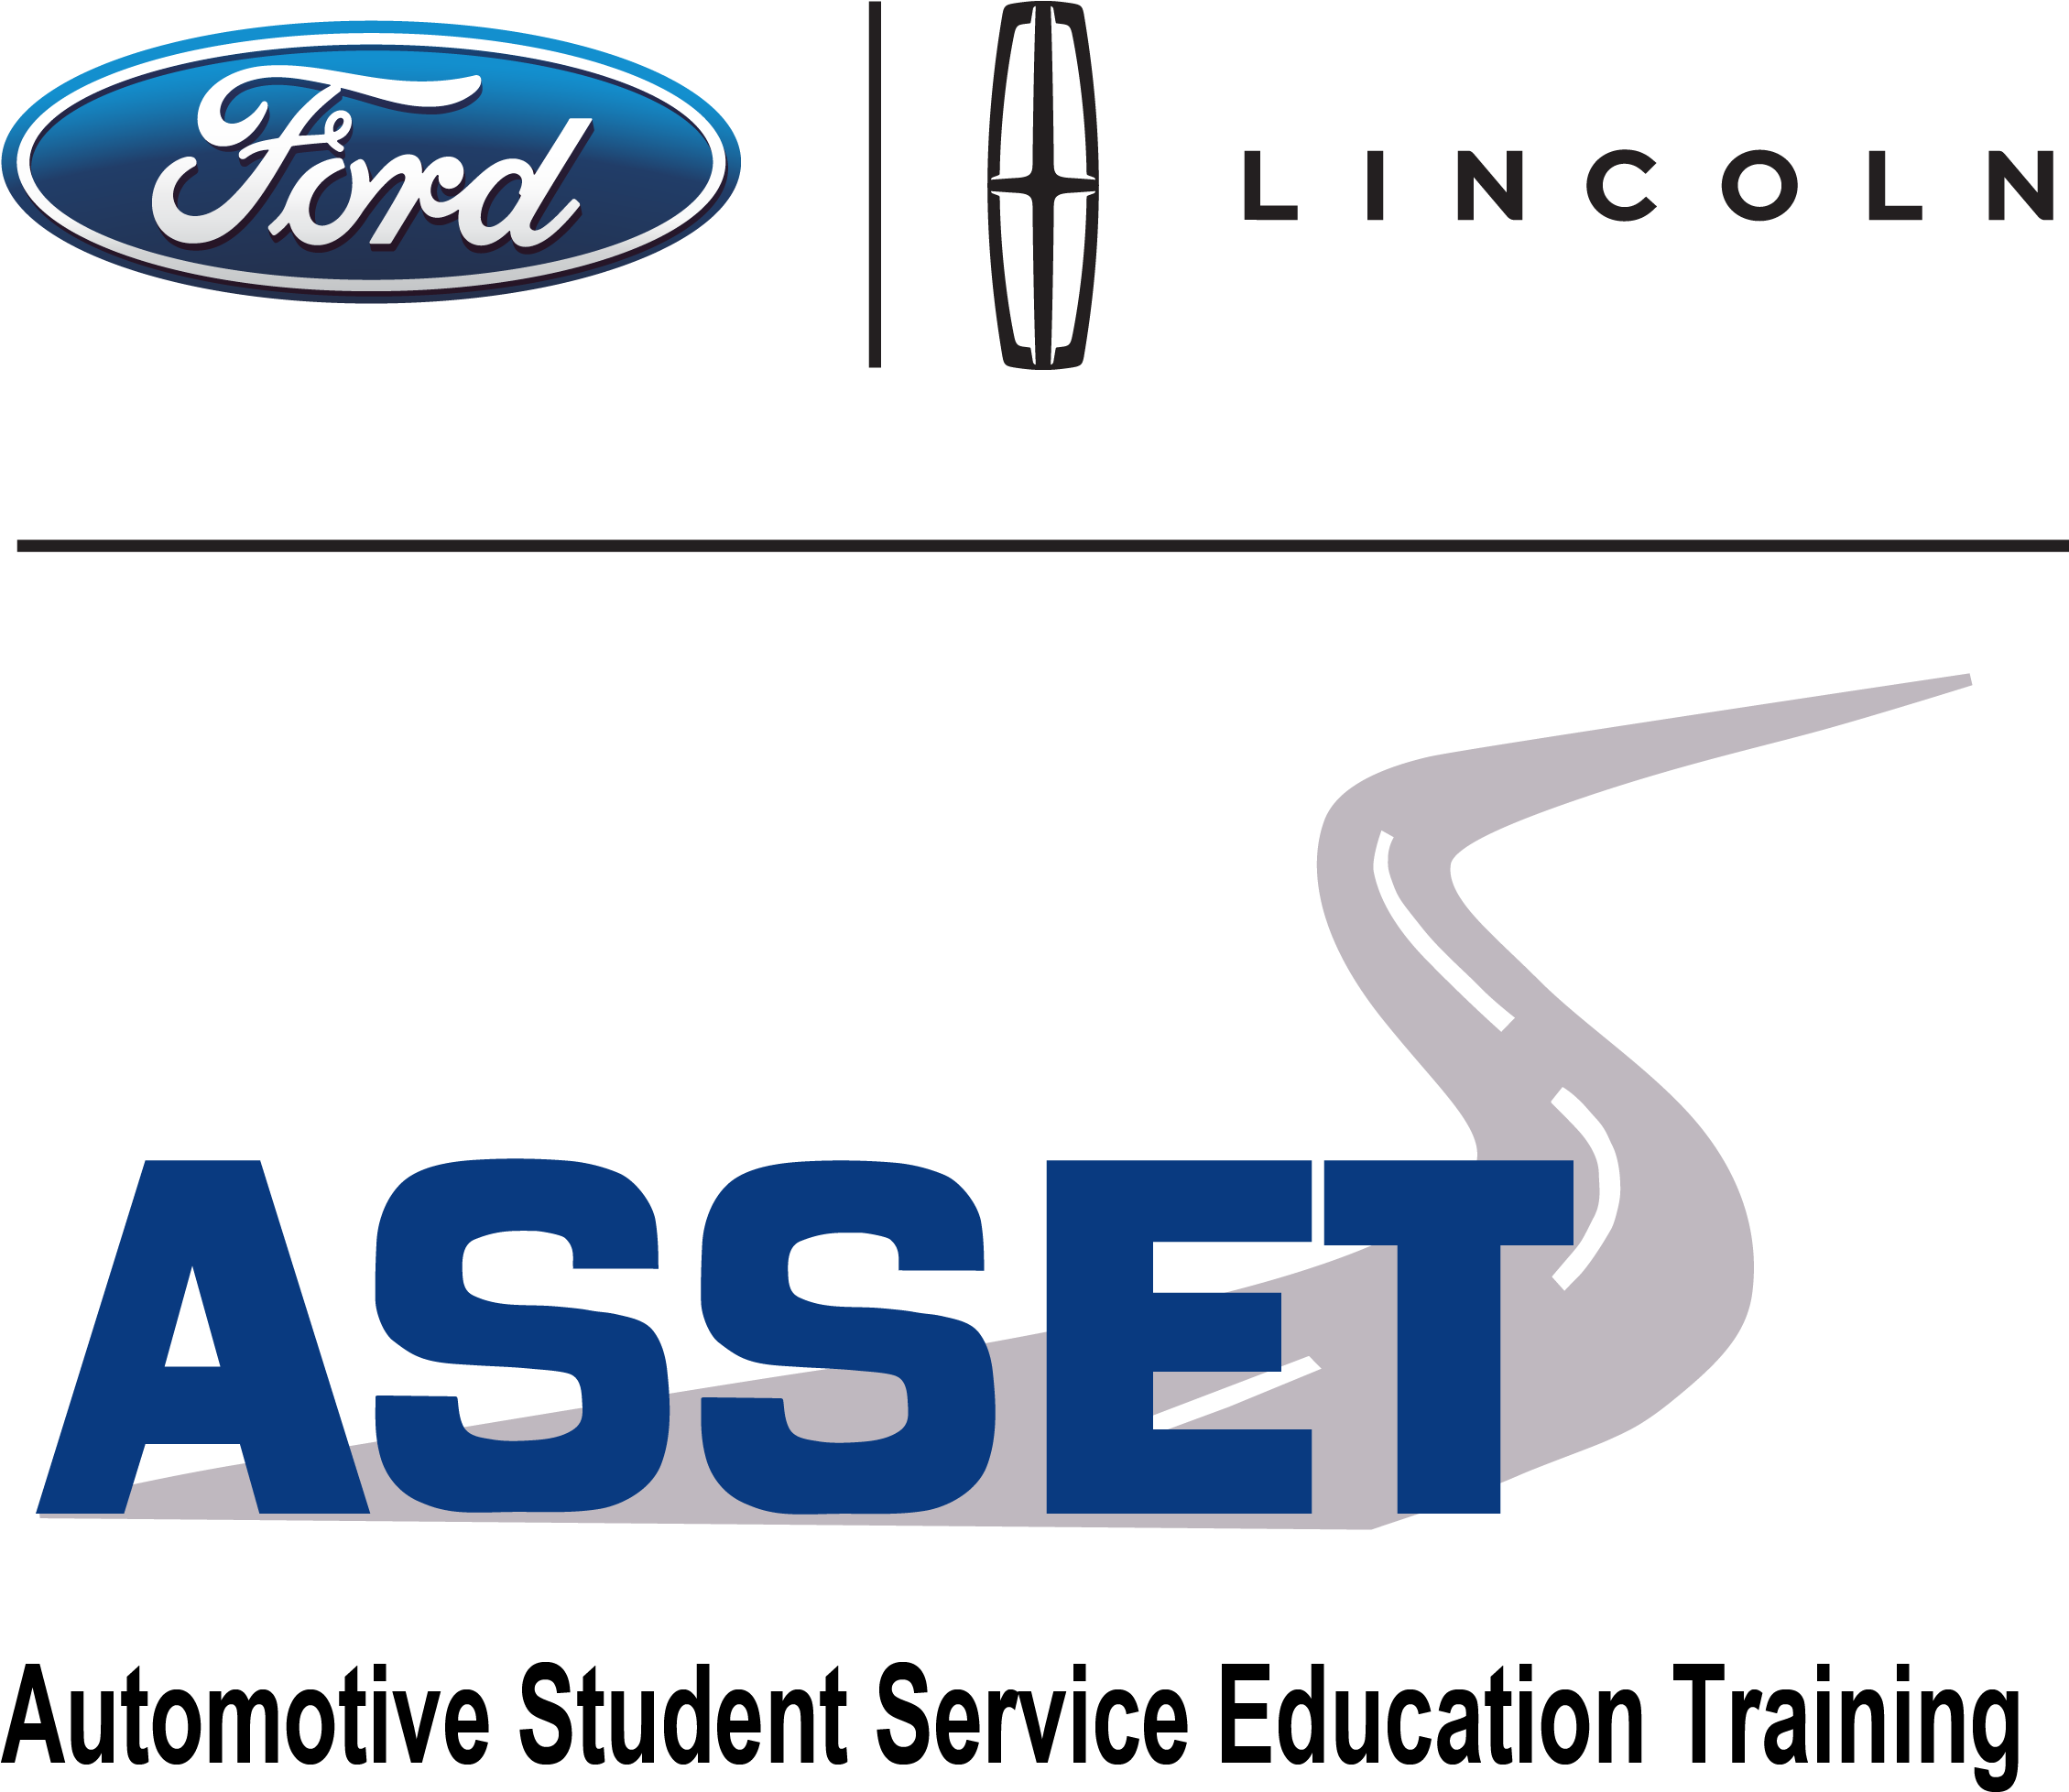 Asset Logo - Ford Asset (2258x1970), Png Download